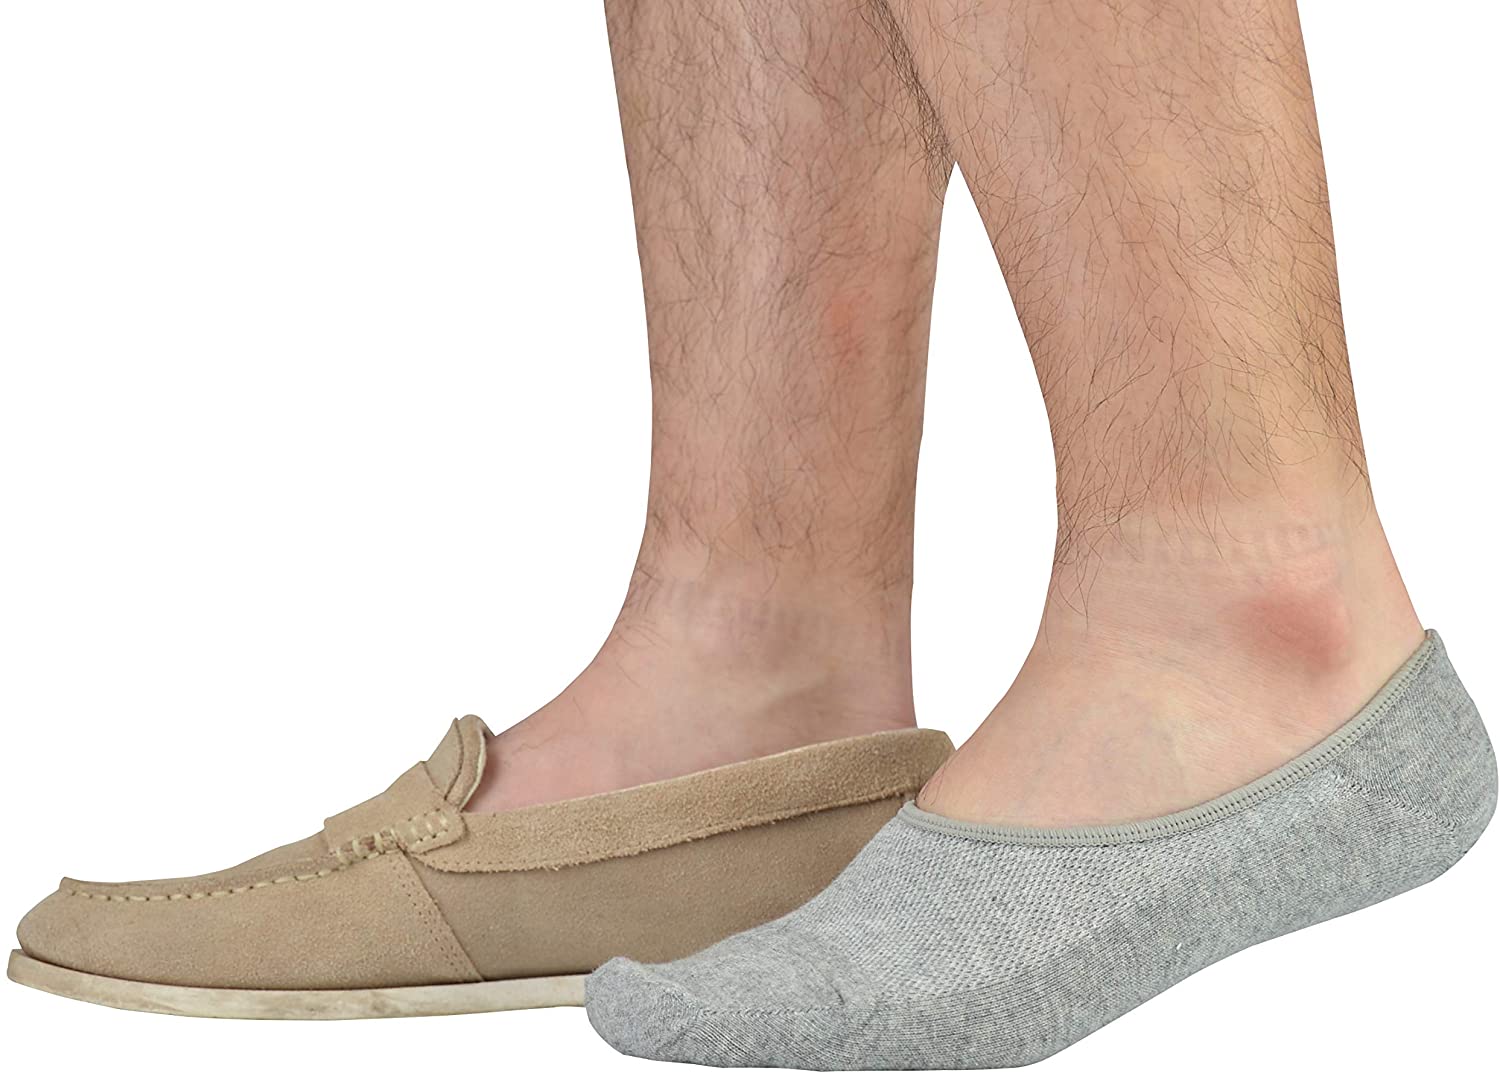 Jormatt Genuine Mens No Show Socks,Loafer Sneakers Low Cut Cotton Socks With Non Slip Grips 